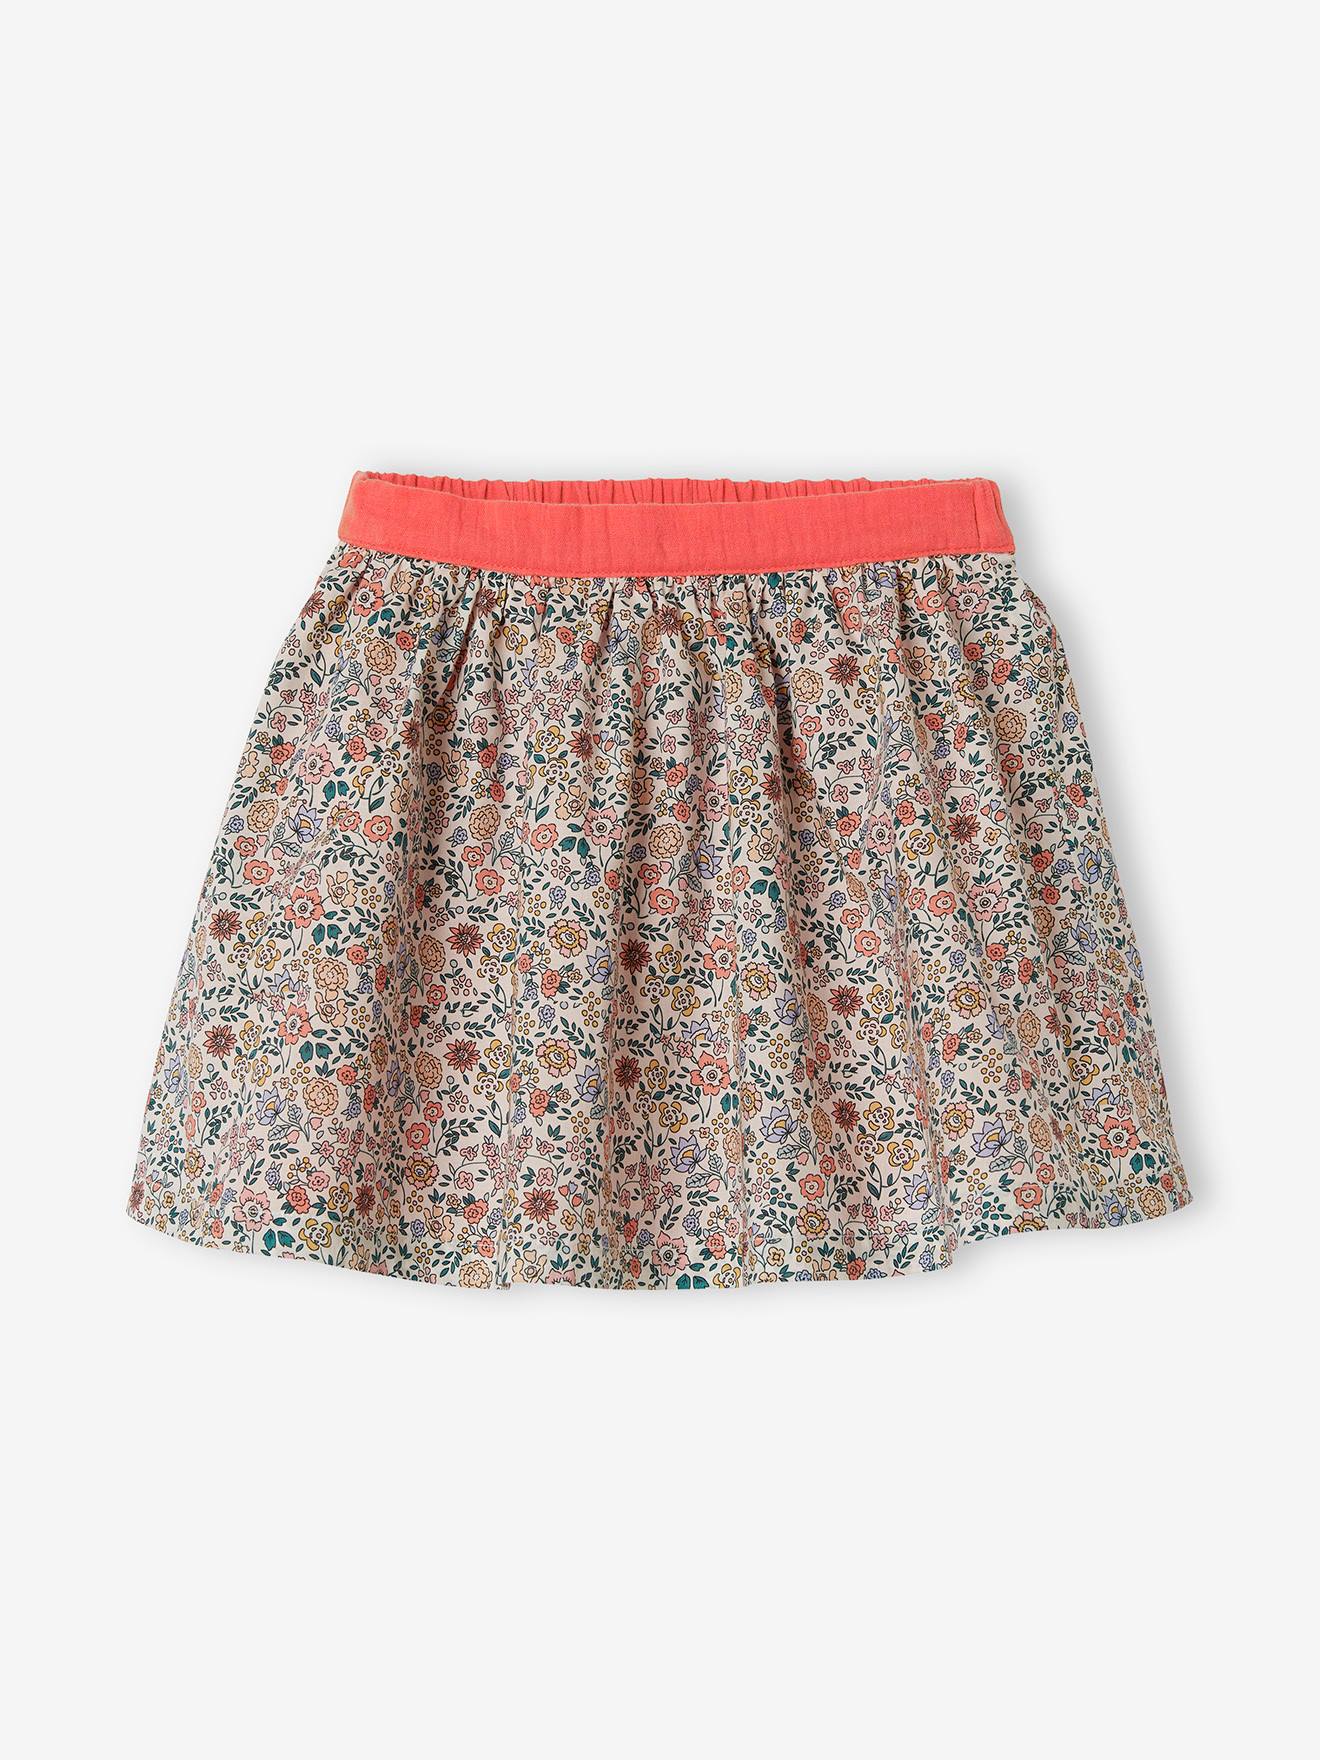 Mini Boden Girls Bright Liberty Floral Print Skort Skirt & Shorts 5-6 Years 